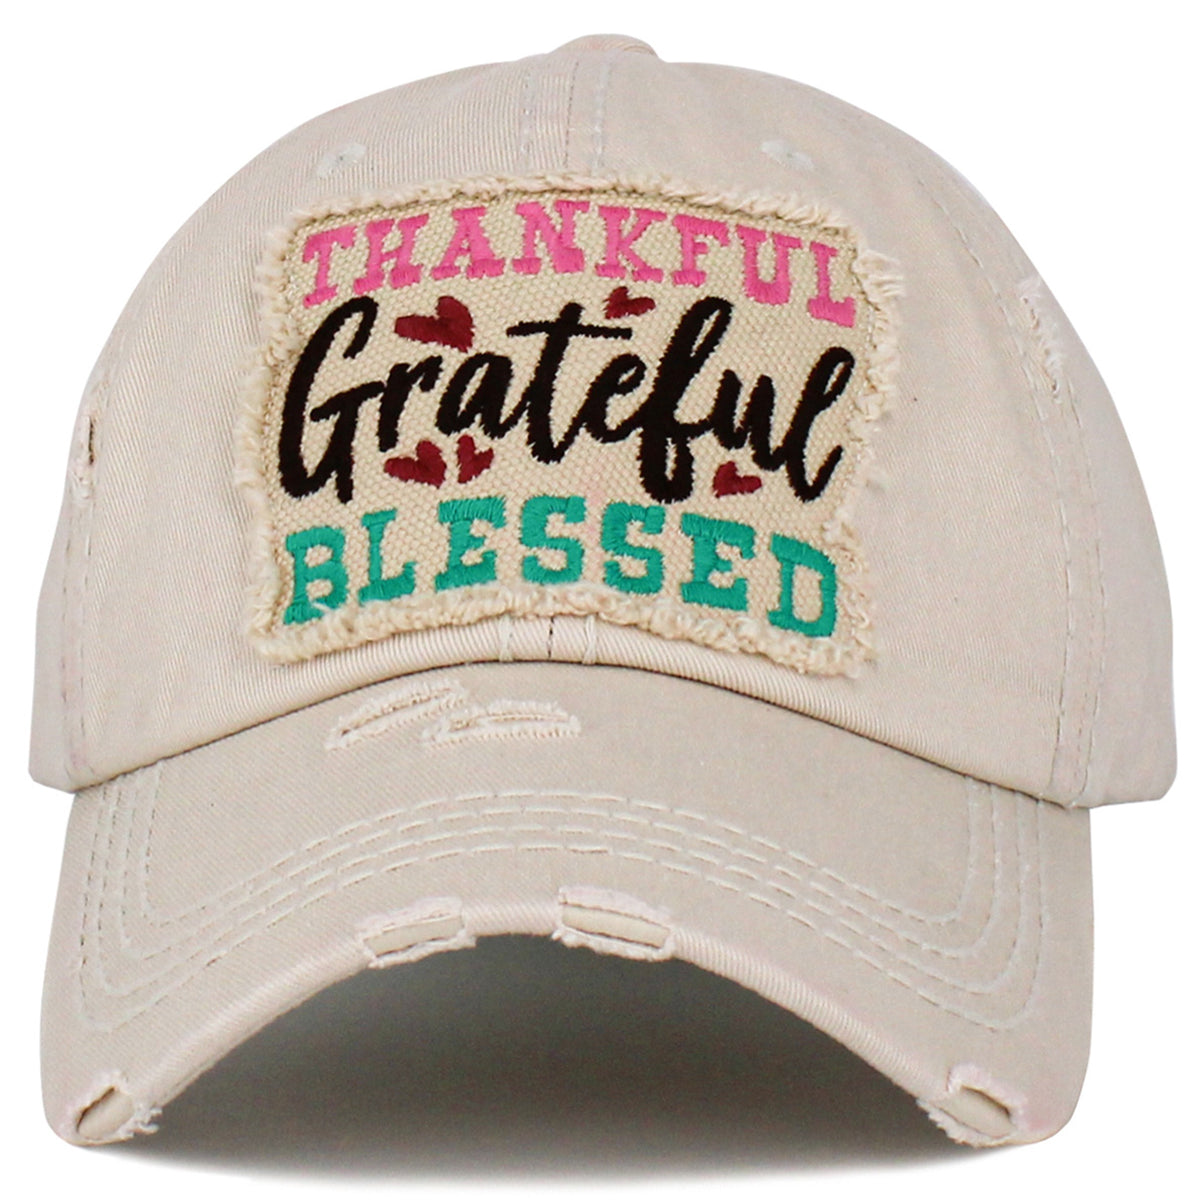 1445 - Thankful Grateful Blessed Hat - Stone